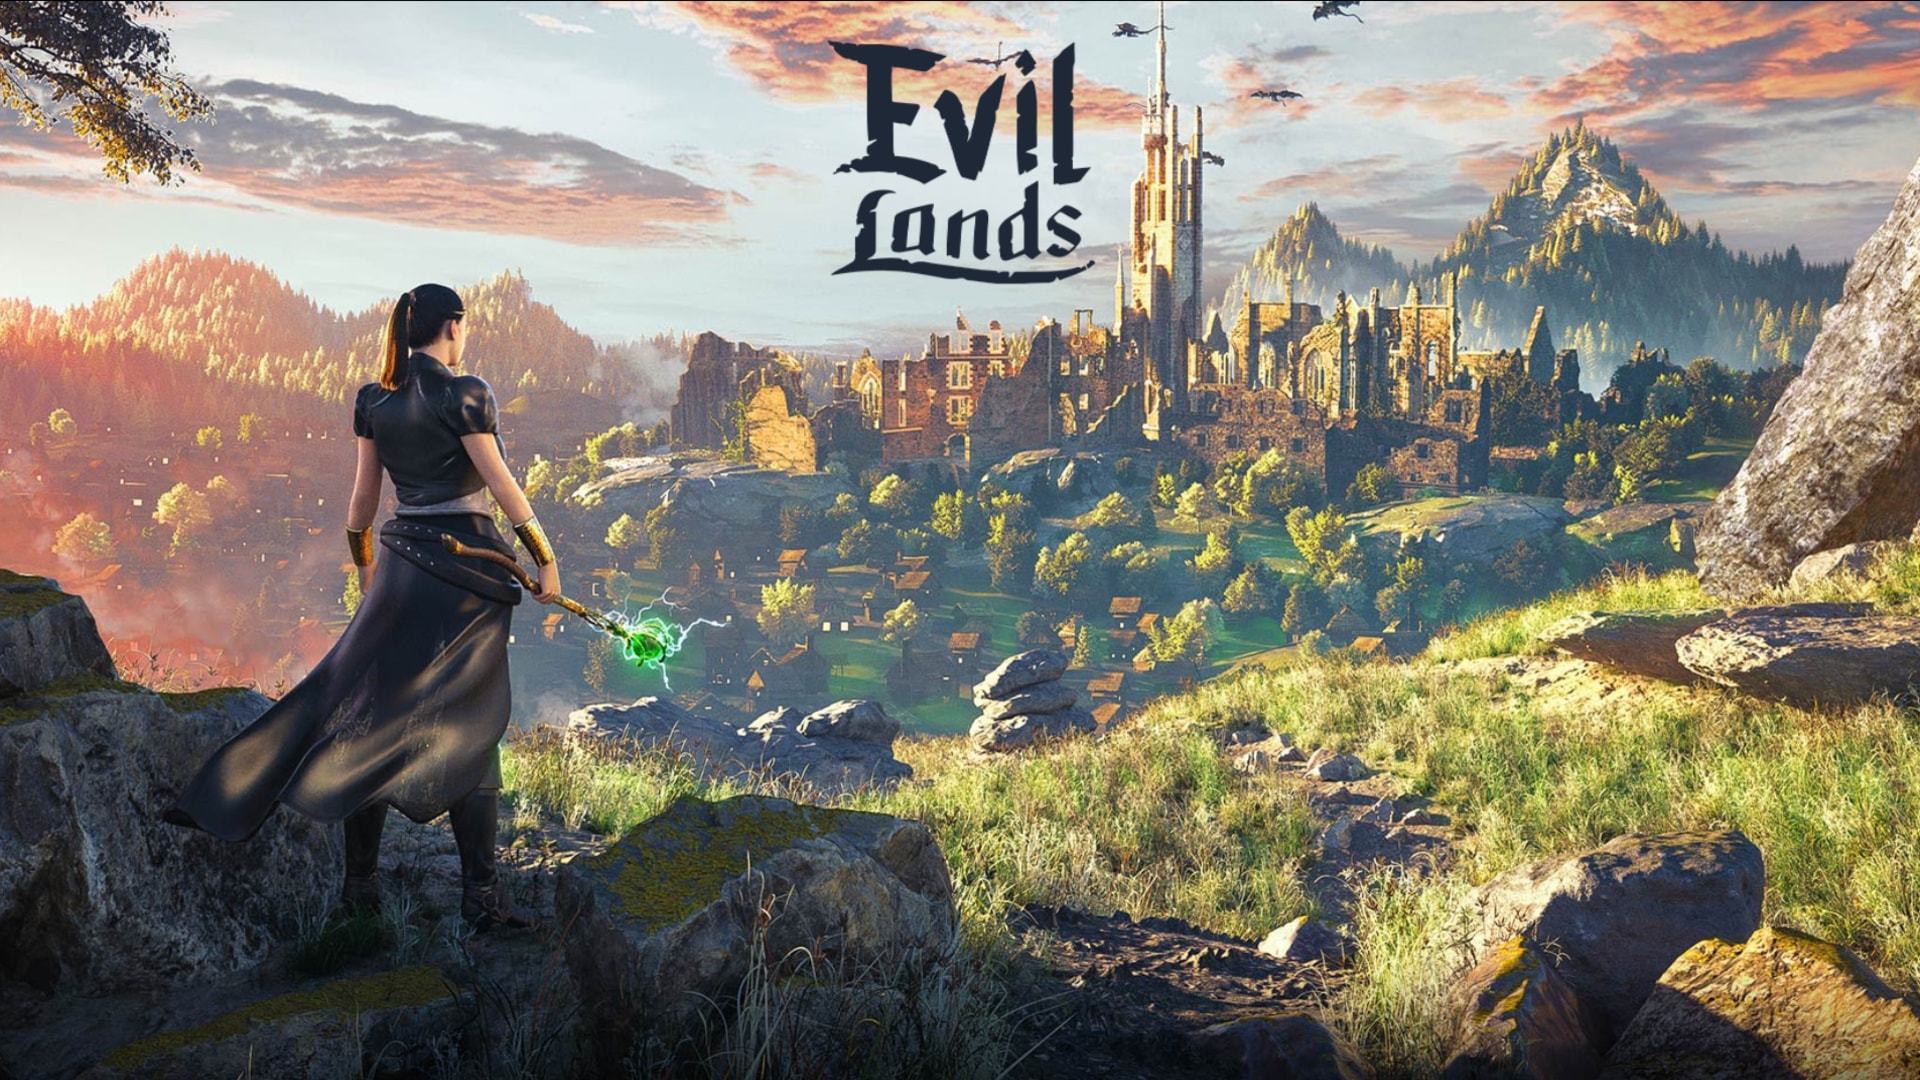 Evil Lands - Game mobile cày cuốc 2022 hay nhất